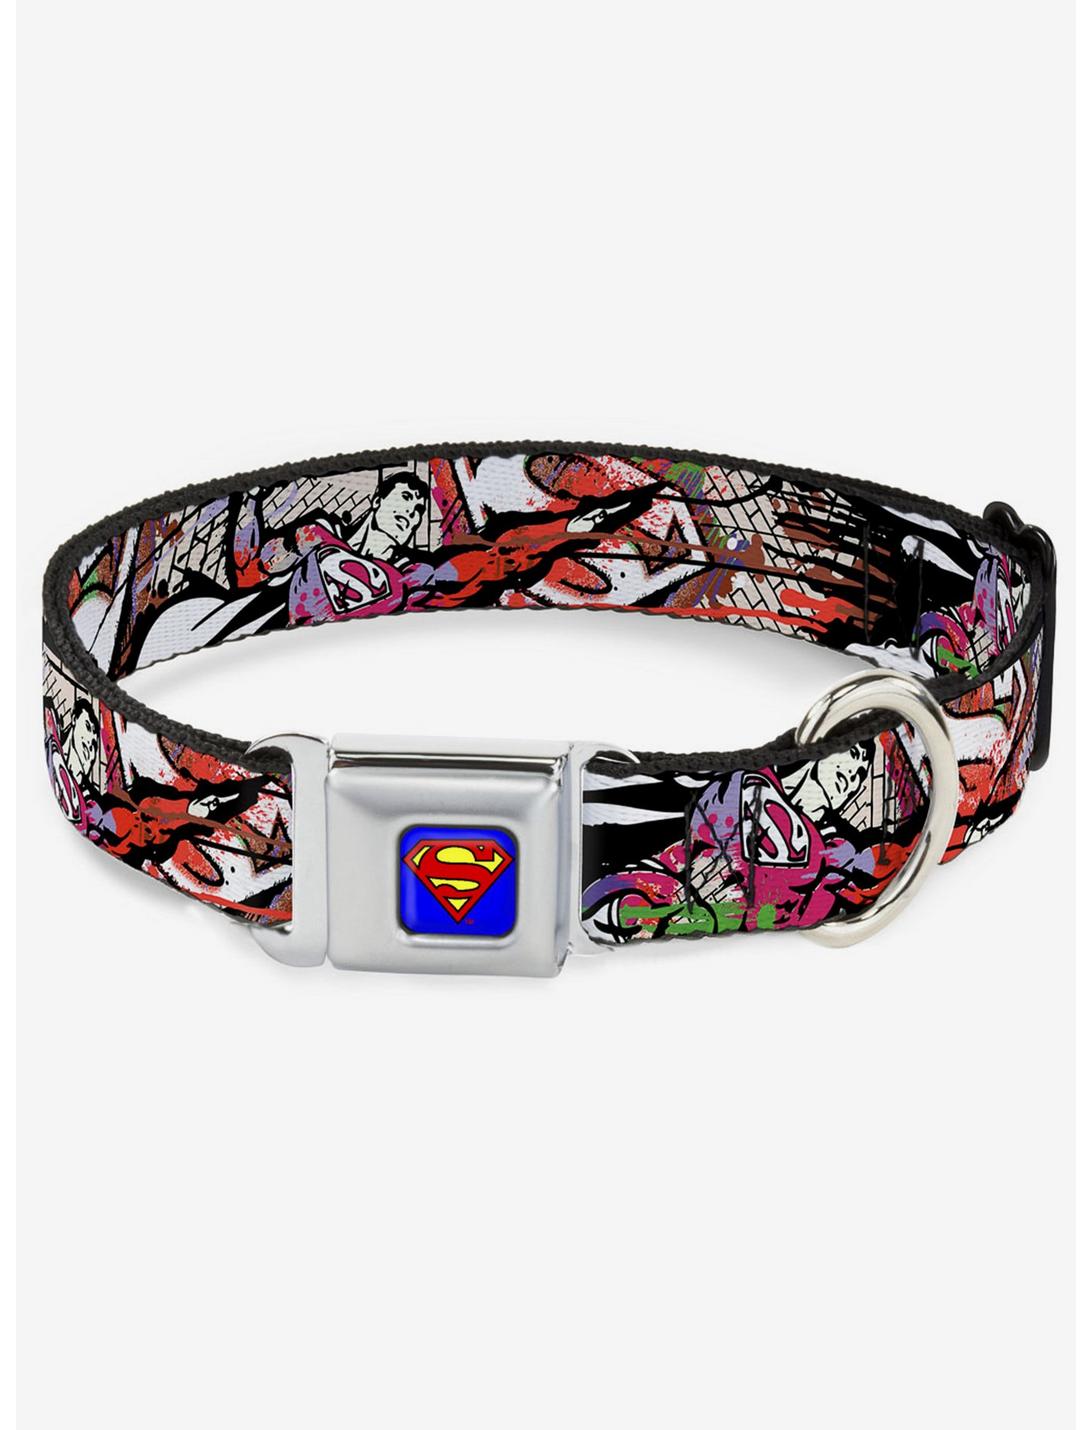 DC Comics Justice League Superman Color Flying Bricks Seatbelt Buckle Dog Collar, MULTICOLOR, hi-res